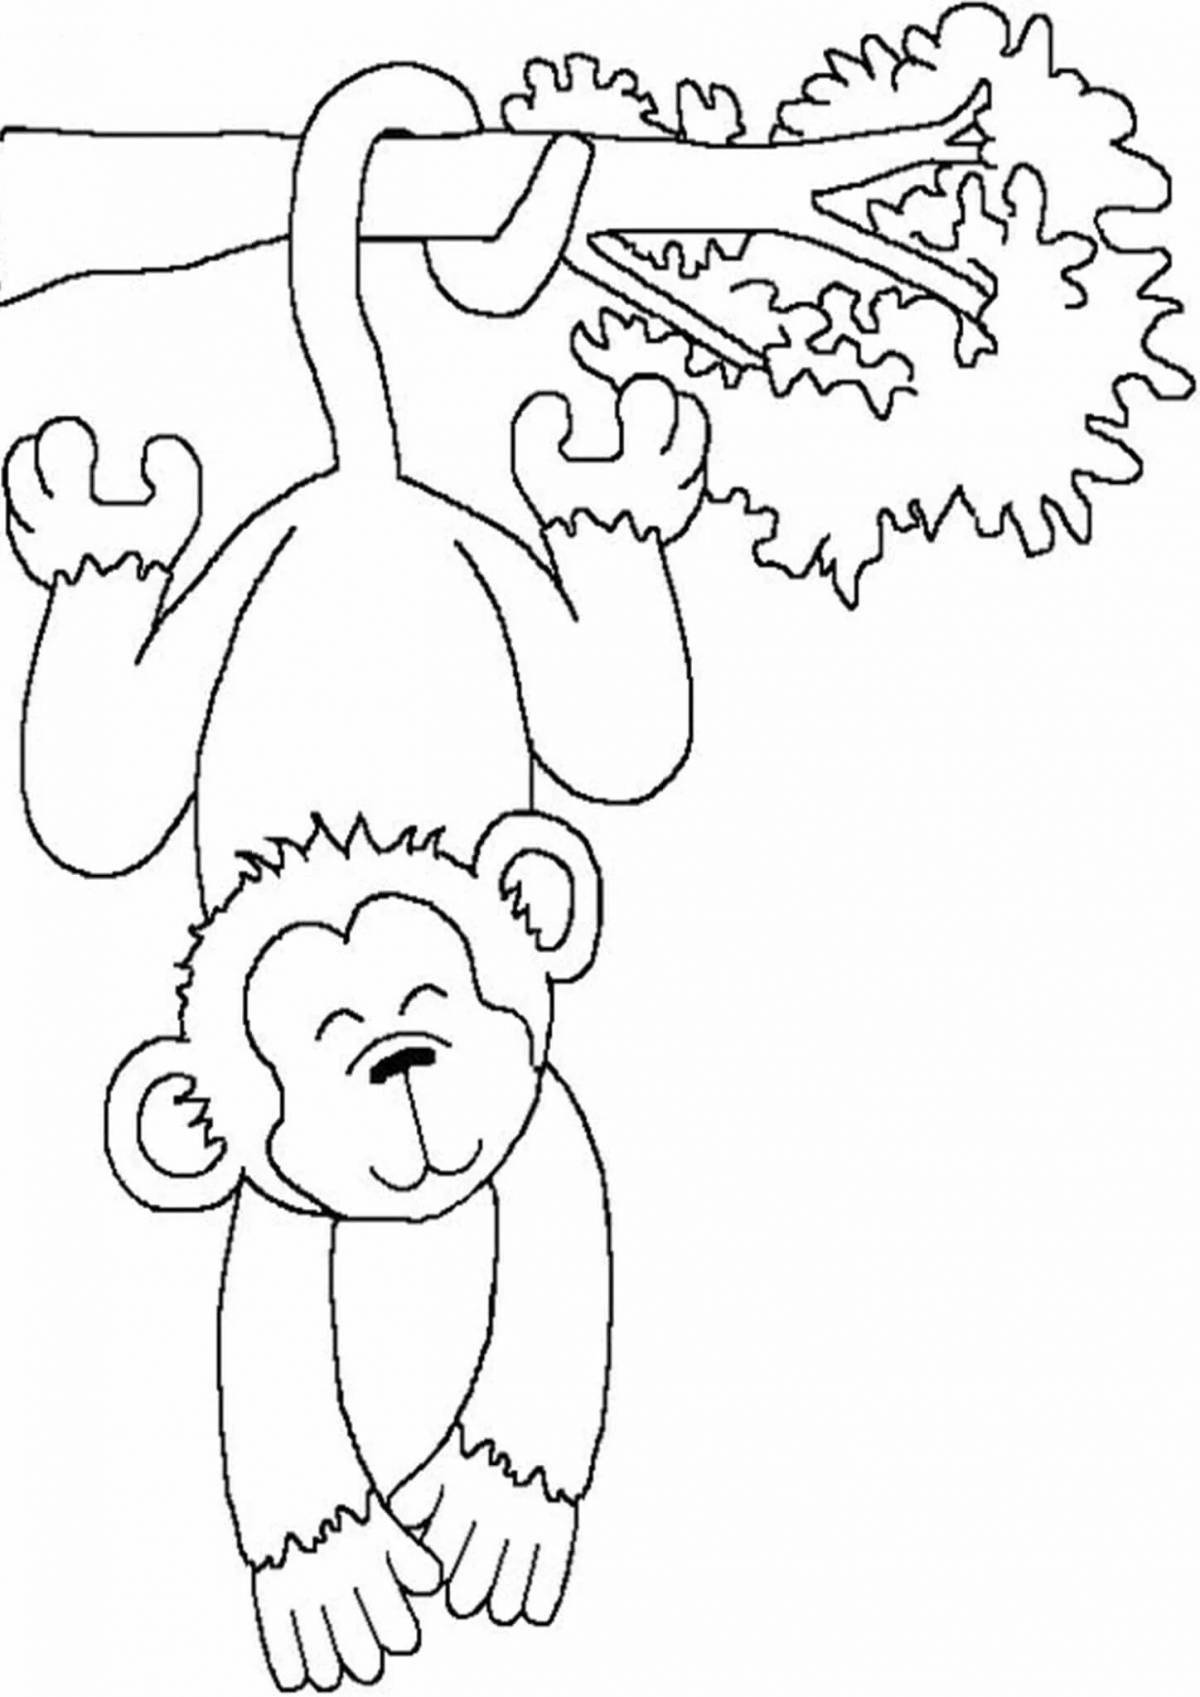 Увлекательная раскраска обезьяна